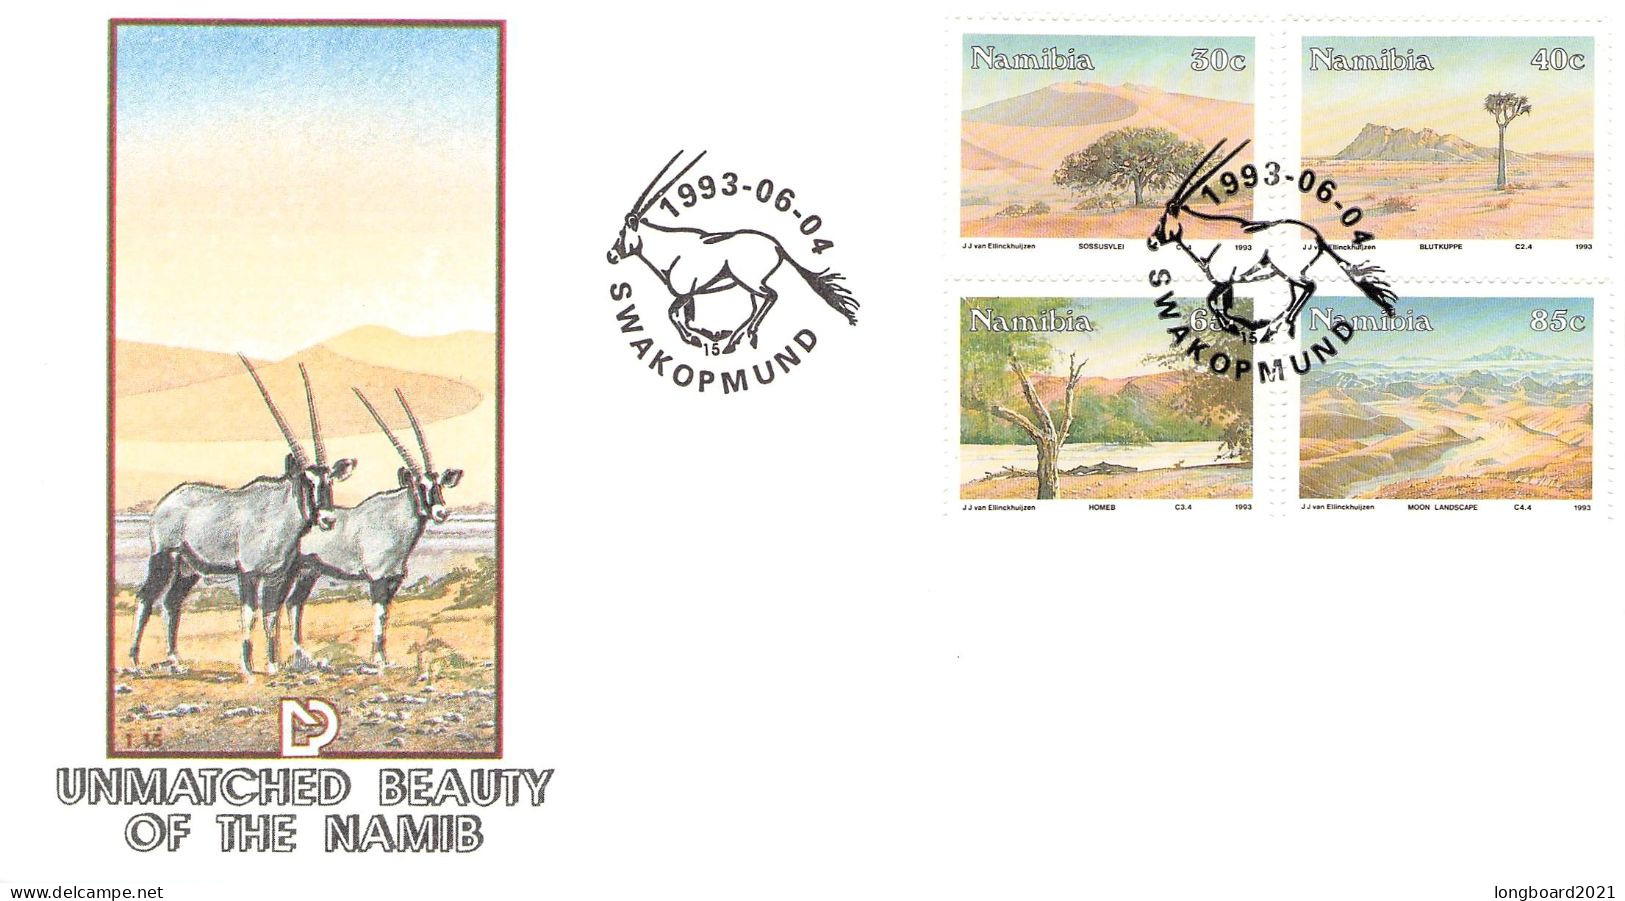 NAMIBIA - FDC 1993 UNMATCHED BEAUTY OF THE NAMIB / 4304 - Namibia (1990- ...)